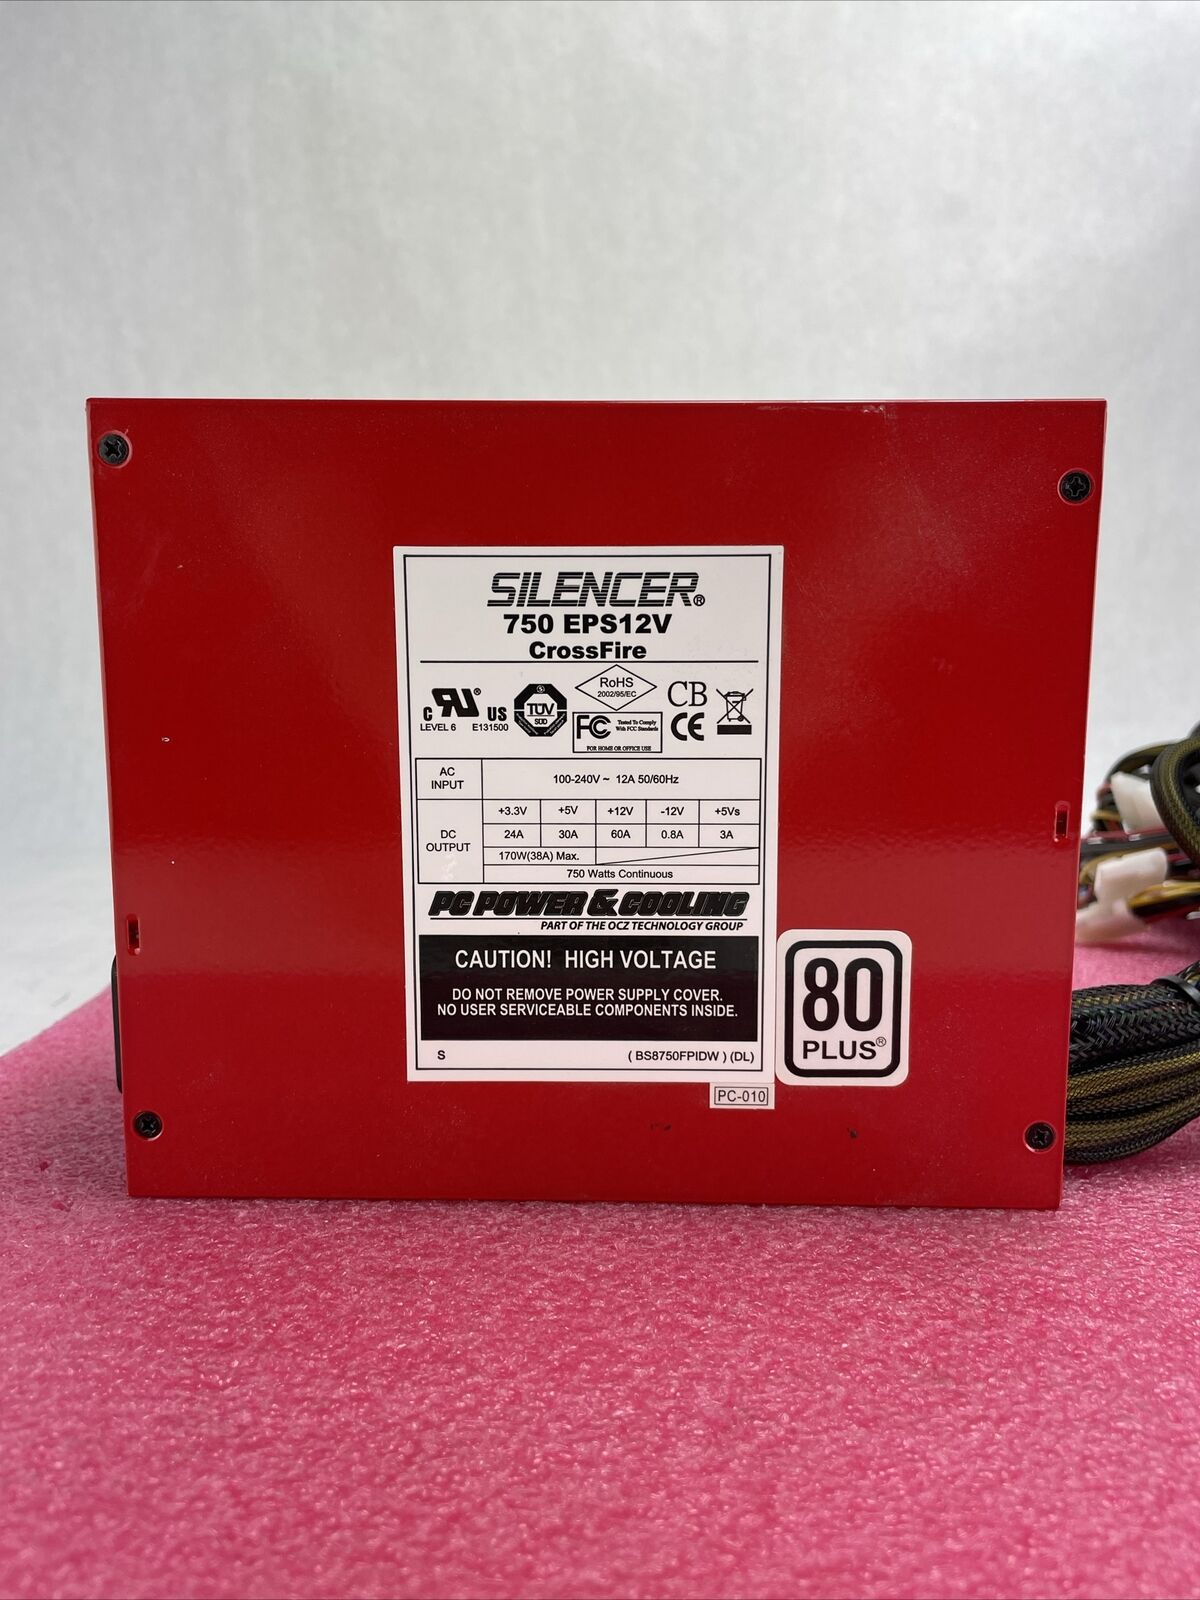 Silencer 750 EPS12V Crossfire 750W Power Supply